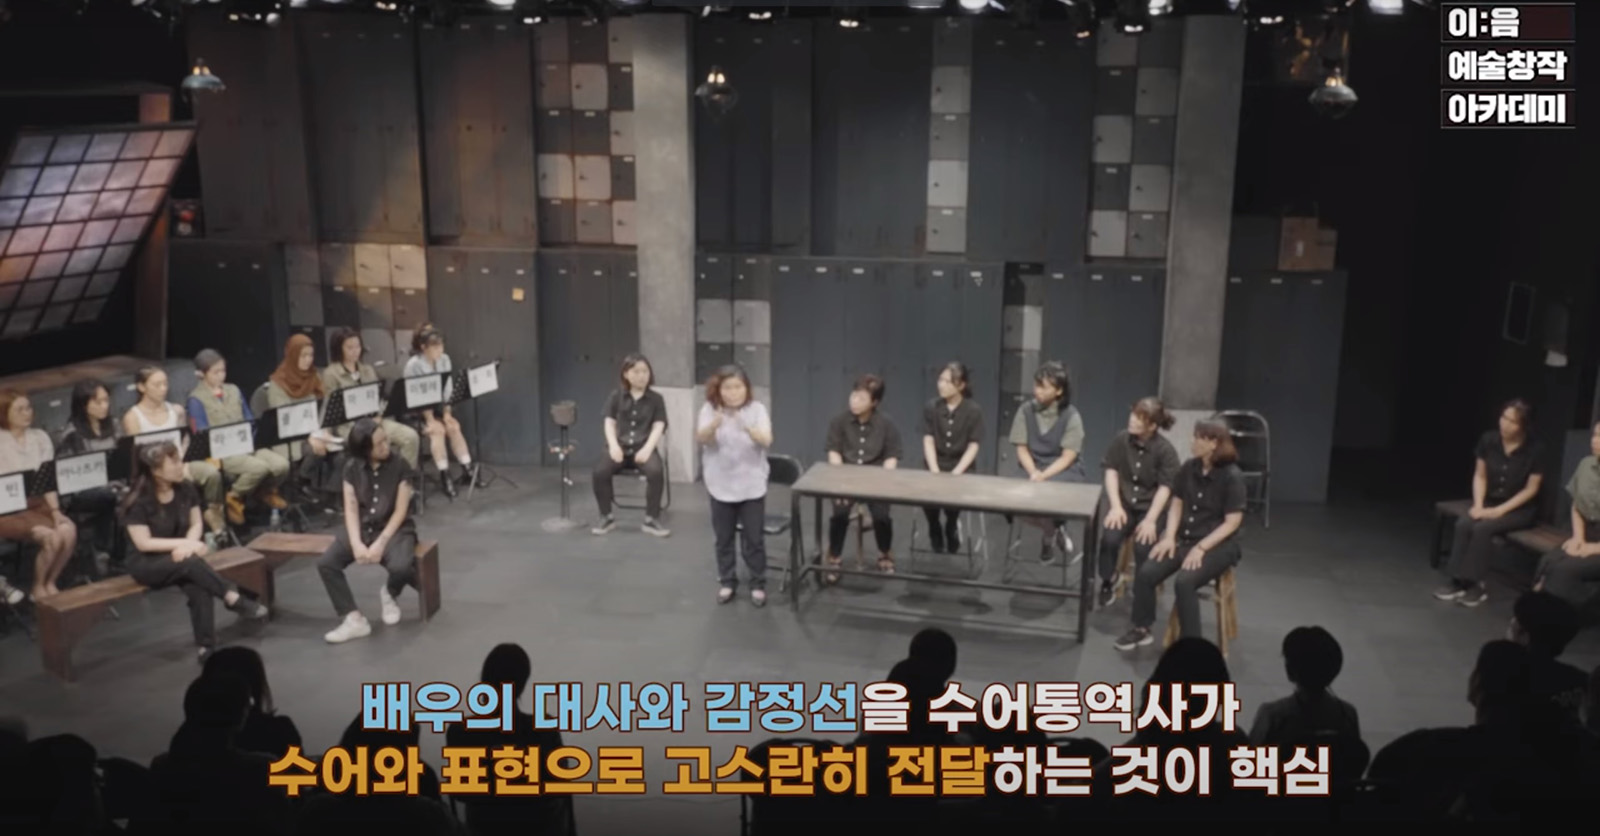 〈Sette Minuti〉: Video of making the performance (source: Korea Disability Arts & Culture Center Youtube)